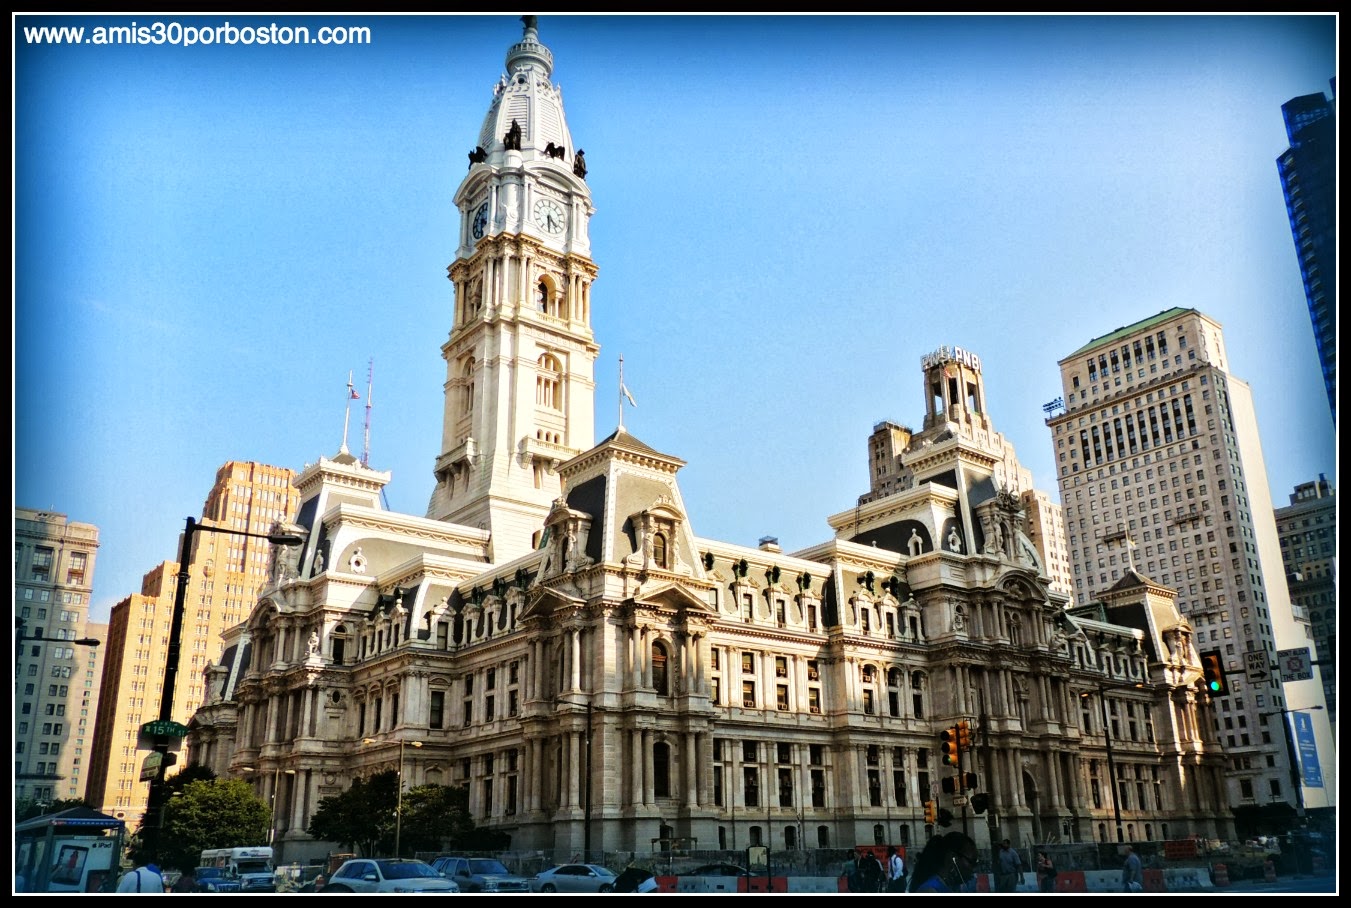 Filadelfia: City Hall